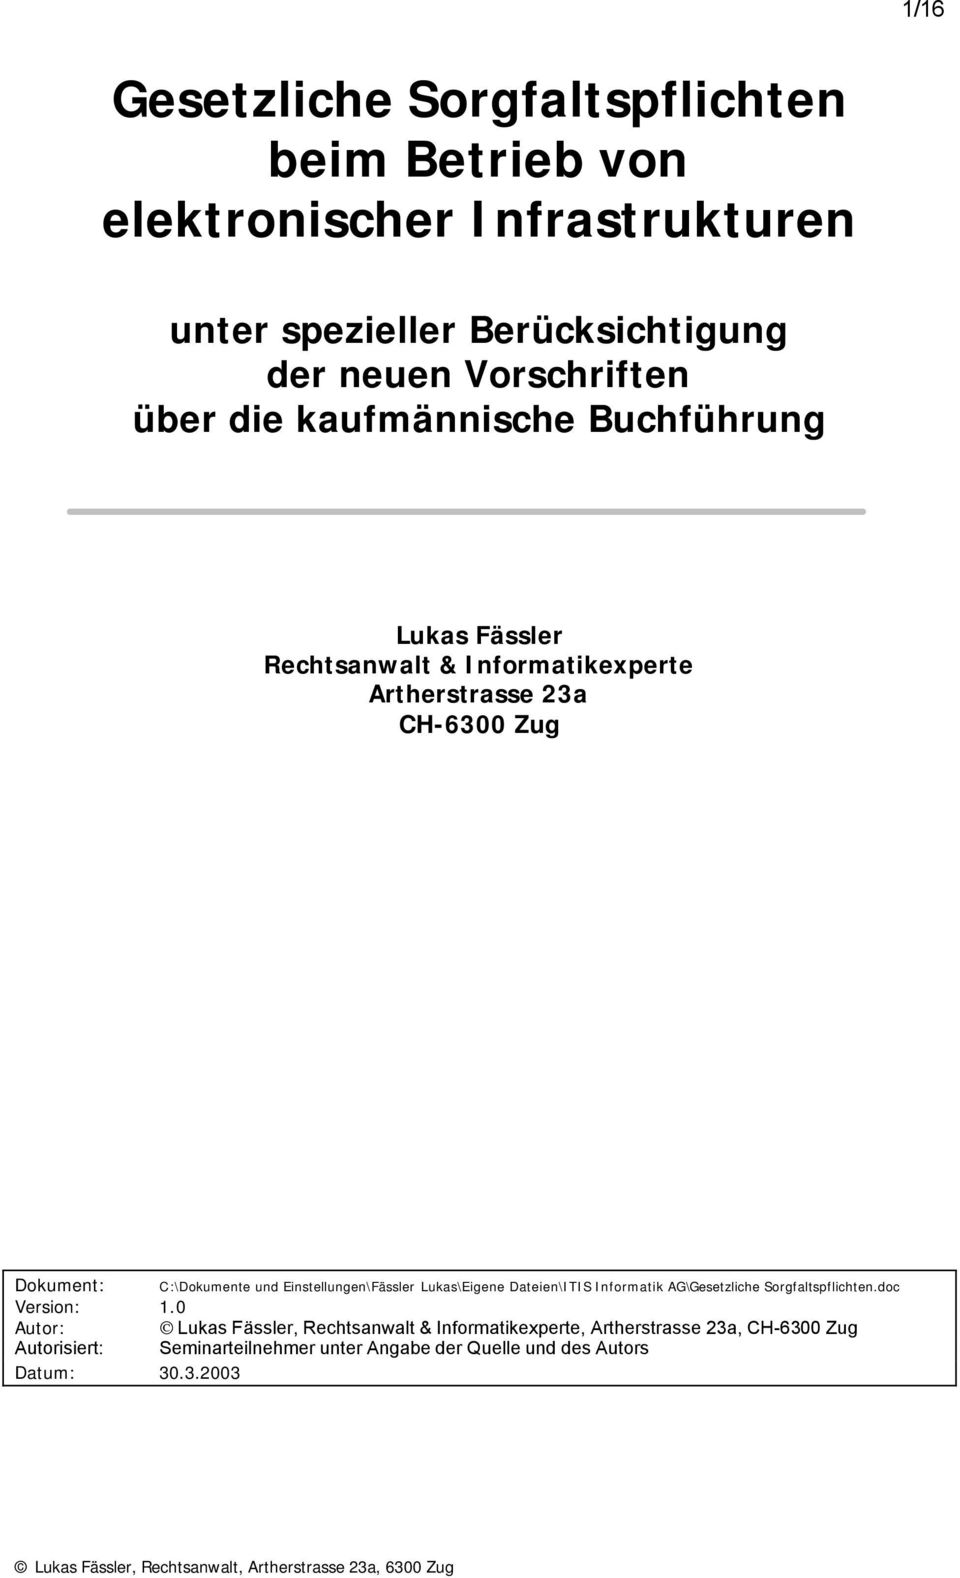 0 Autor: Lukas Fässler, Rechtsanwalt & Informatikexperte, Artherstrasse 23a, CH-6300 Zug Autorisiert: Seminarteilnehmer unter Angabe der